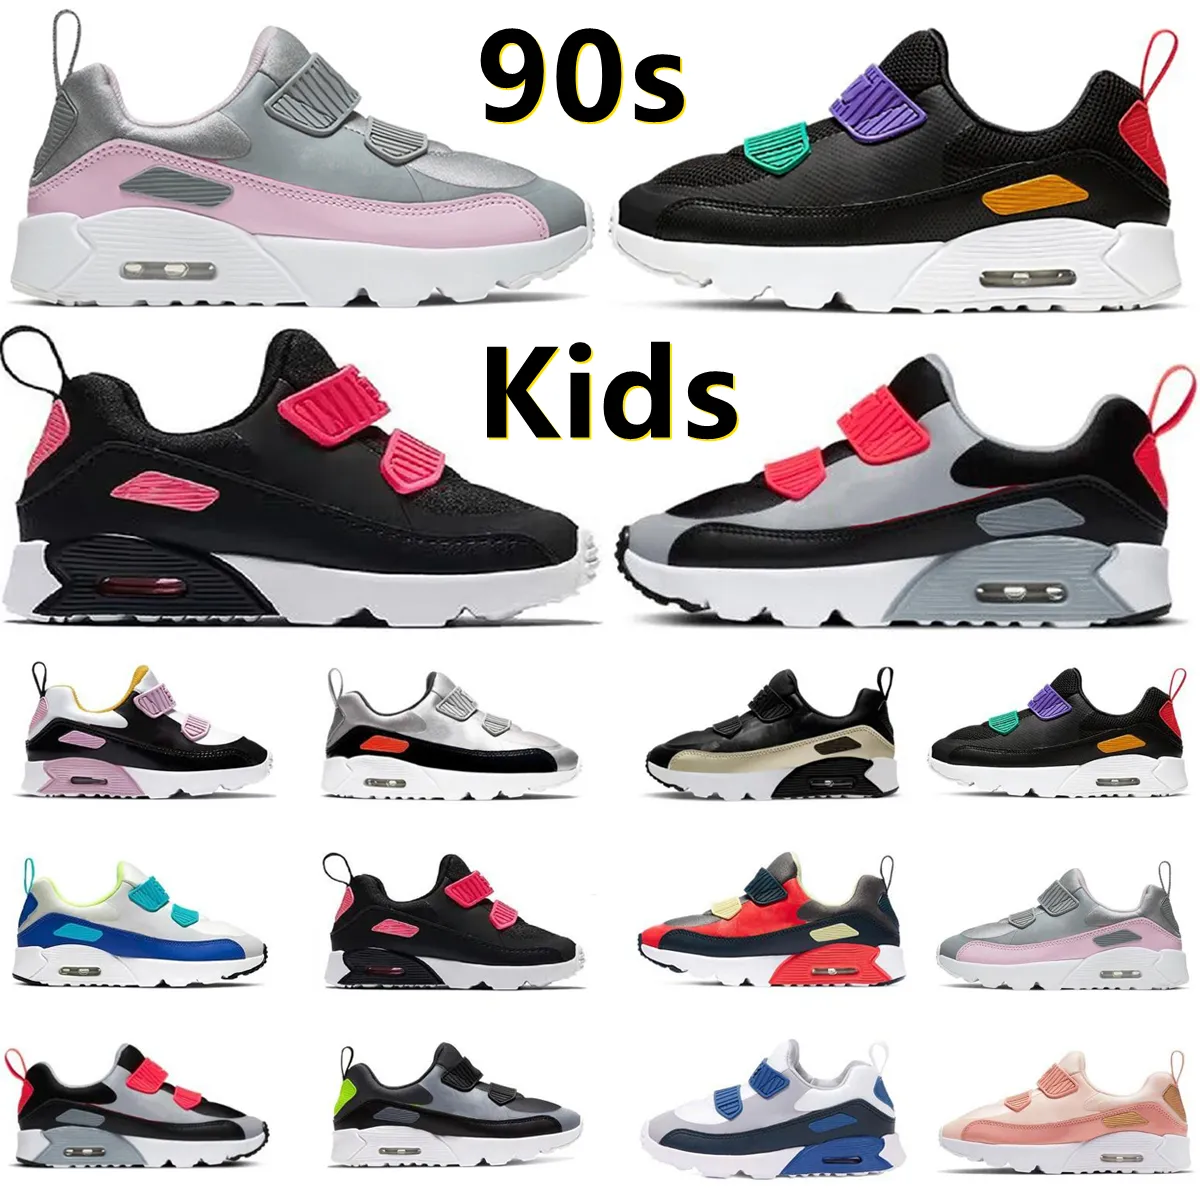 90 90s Kids shoes Children boys baby Preschool PS Athletic Outdoor GAI Designer sneaker Trainers Toddler Girl Chaussures Pour Enfant Sapatos infantis Multi Color